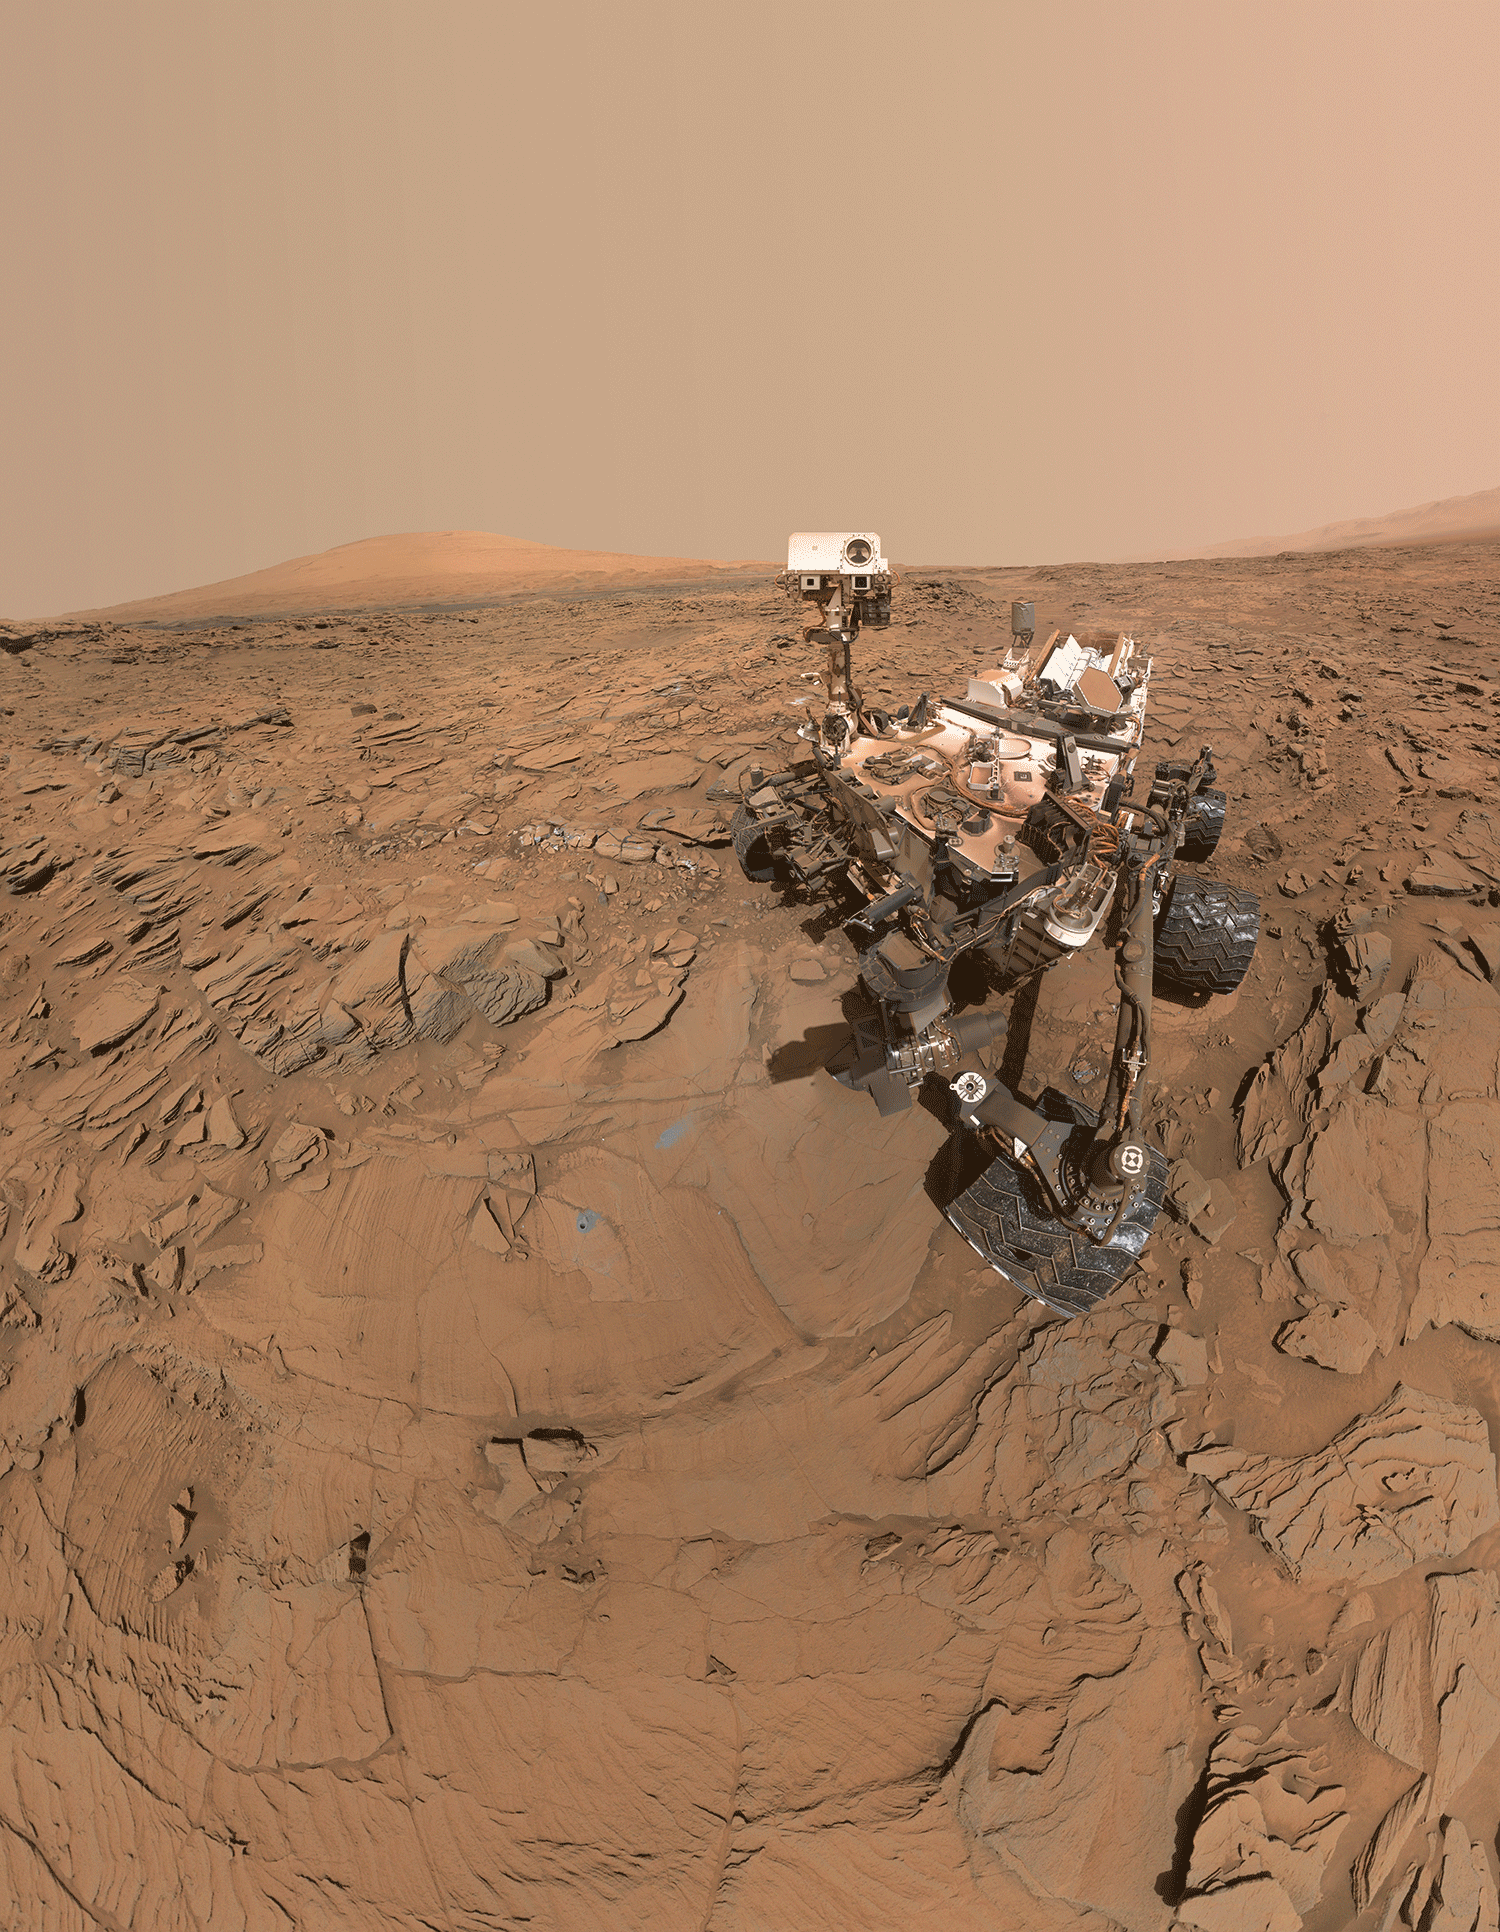 Image of NASA's Curiosity rover on Mars